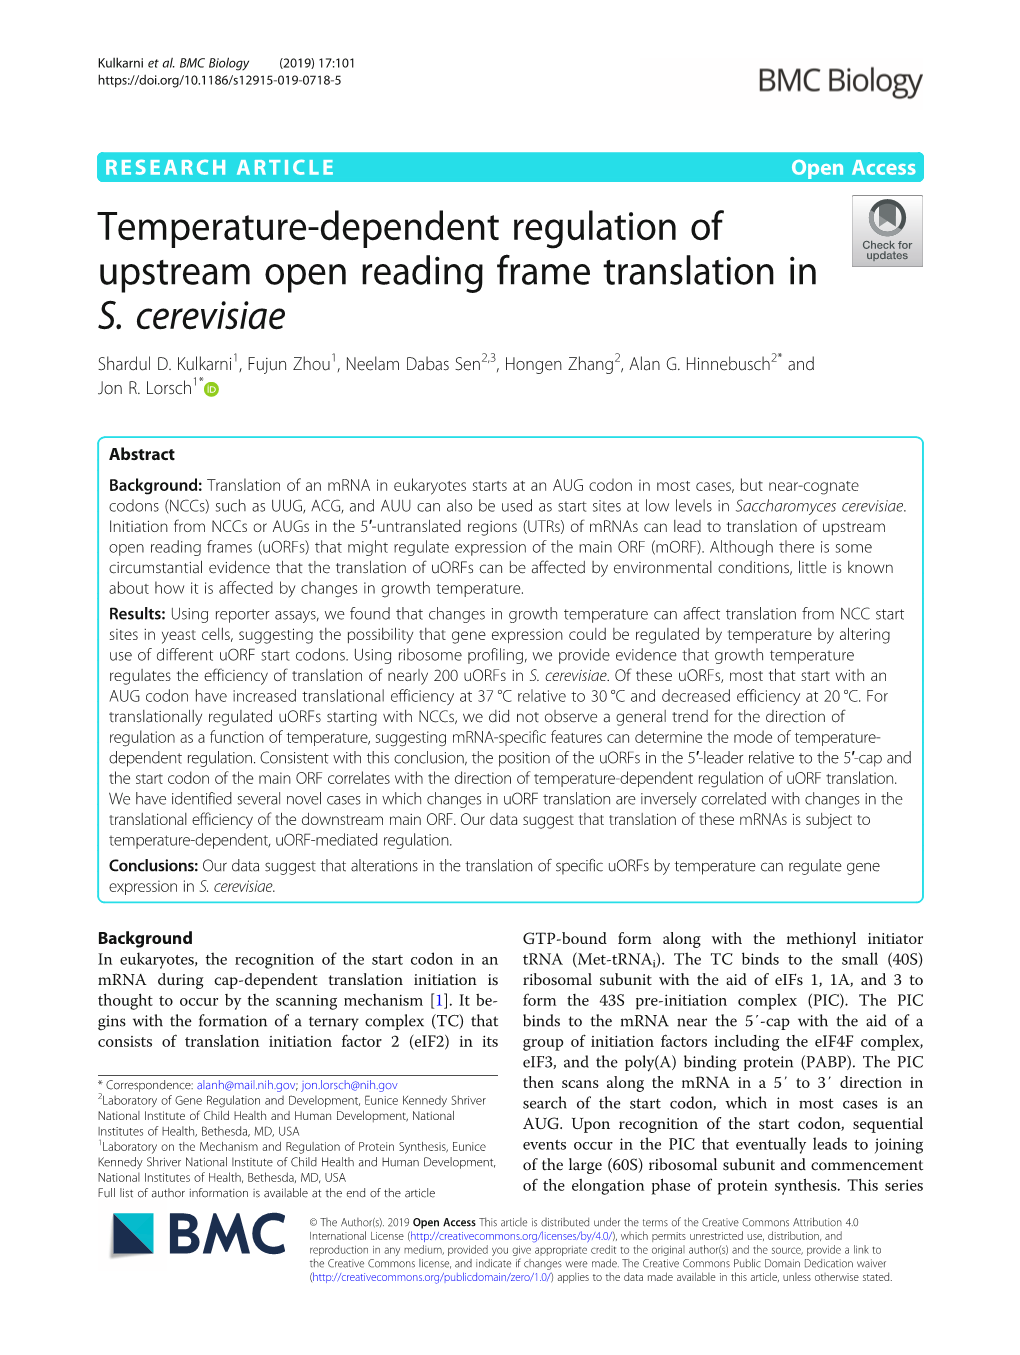 Temperature-Dependent Regulation of Upstream Open Reading Frame Translation in S